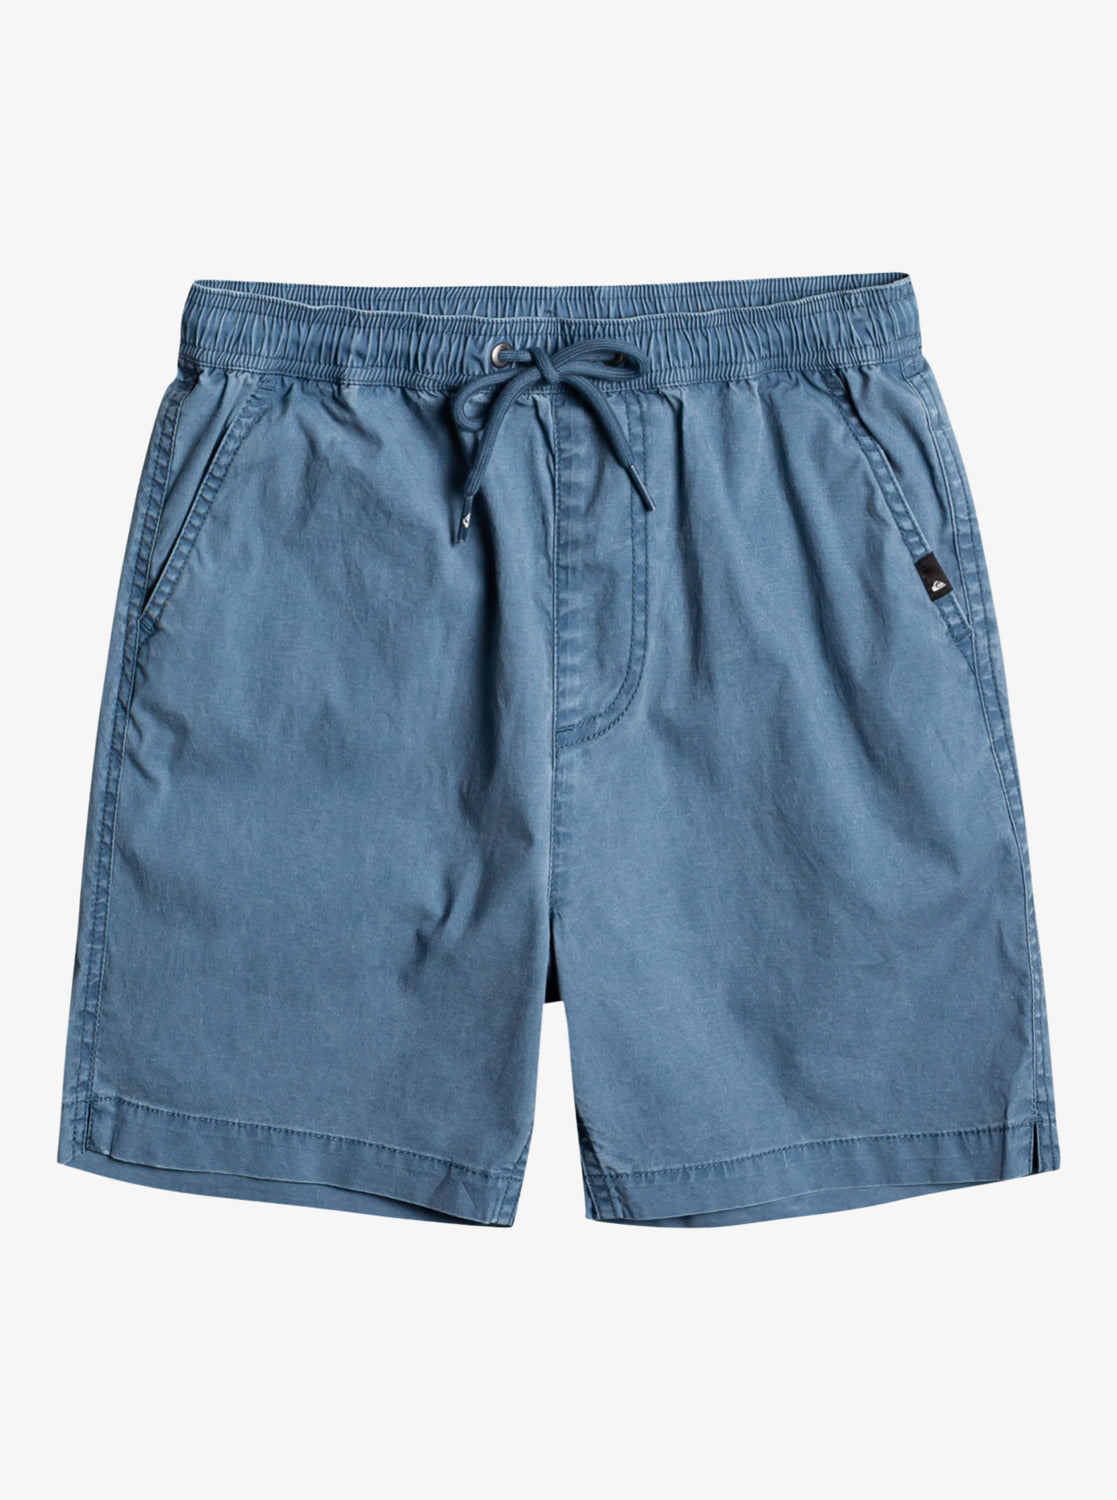 Xersion Boys Active Wear Shorts Size Medium Blue White Gray on eBid United  States